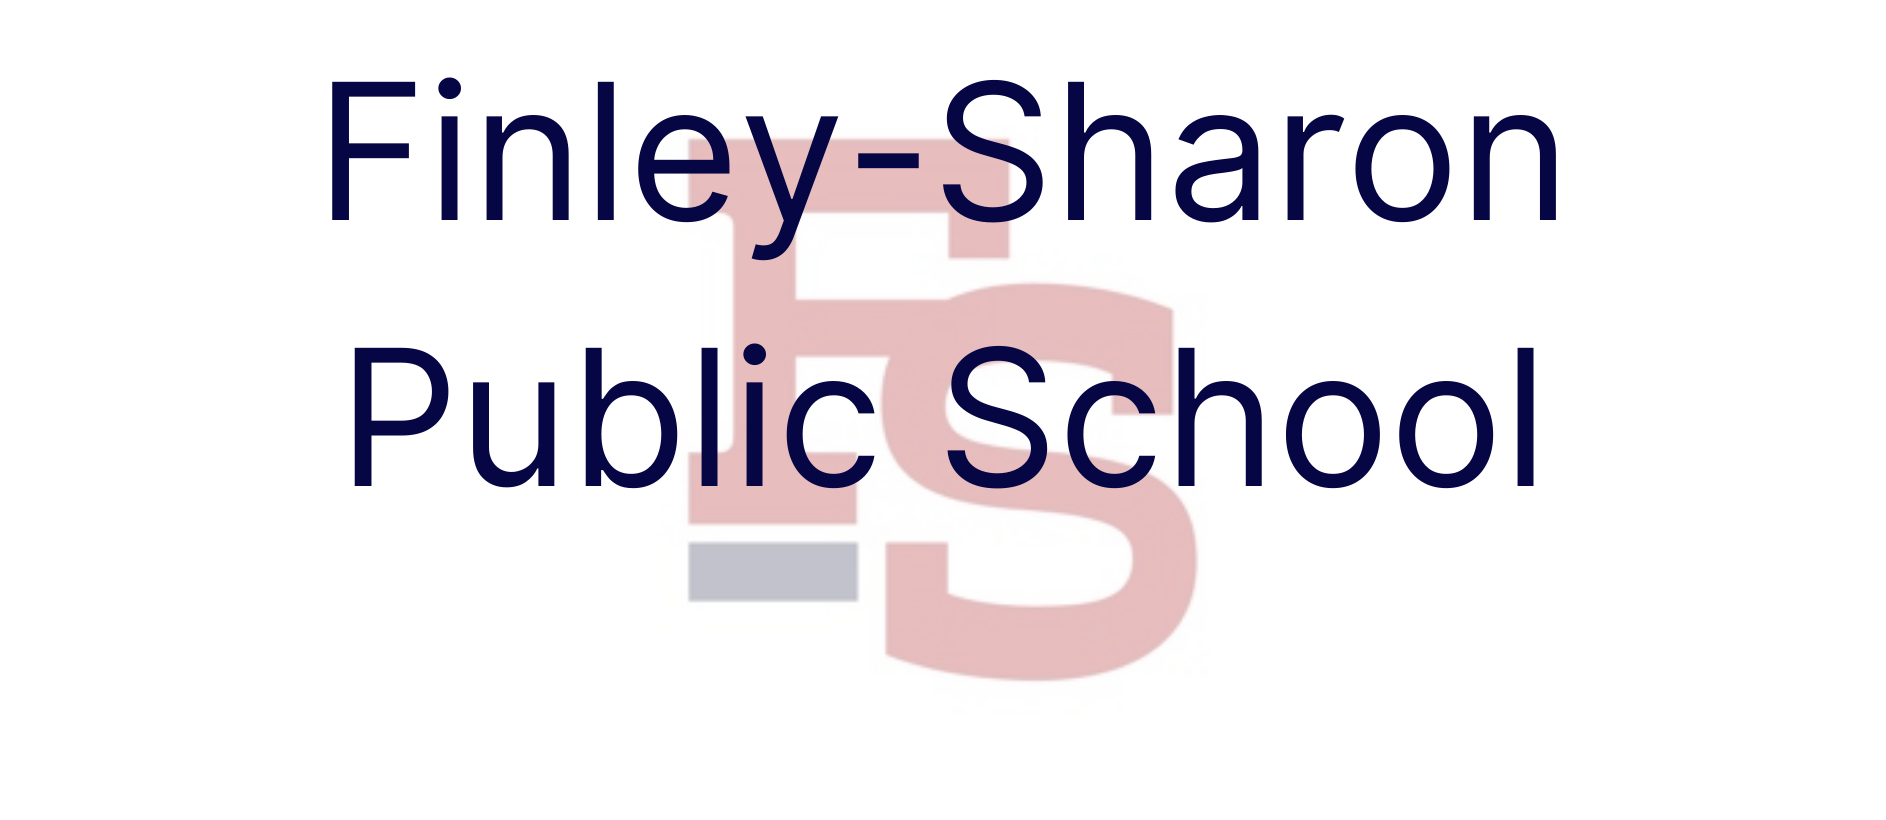 Finley Sharon Public School 